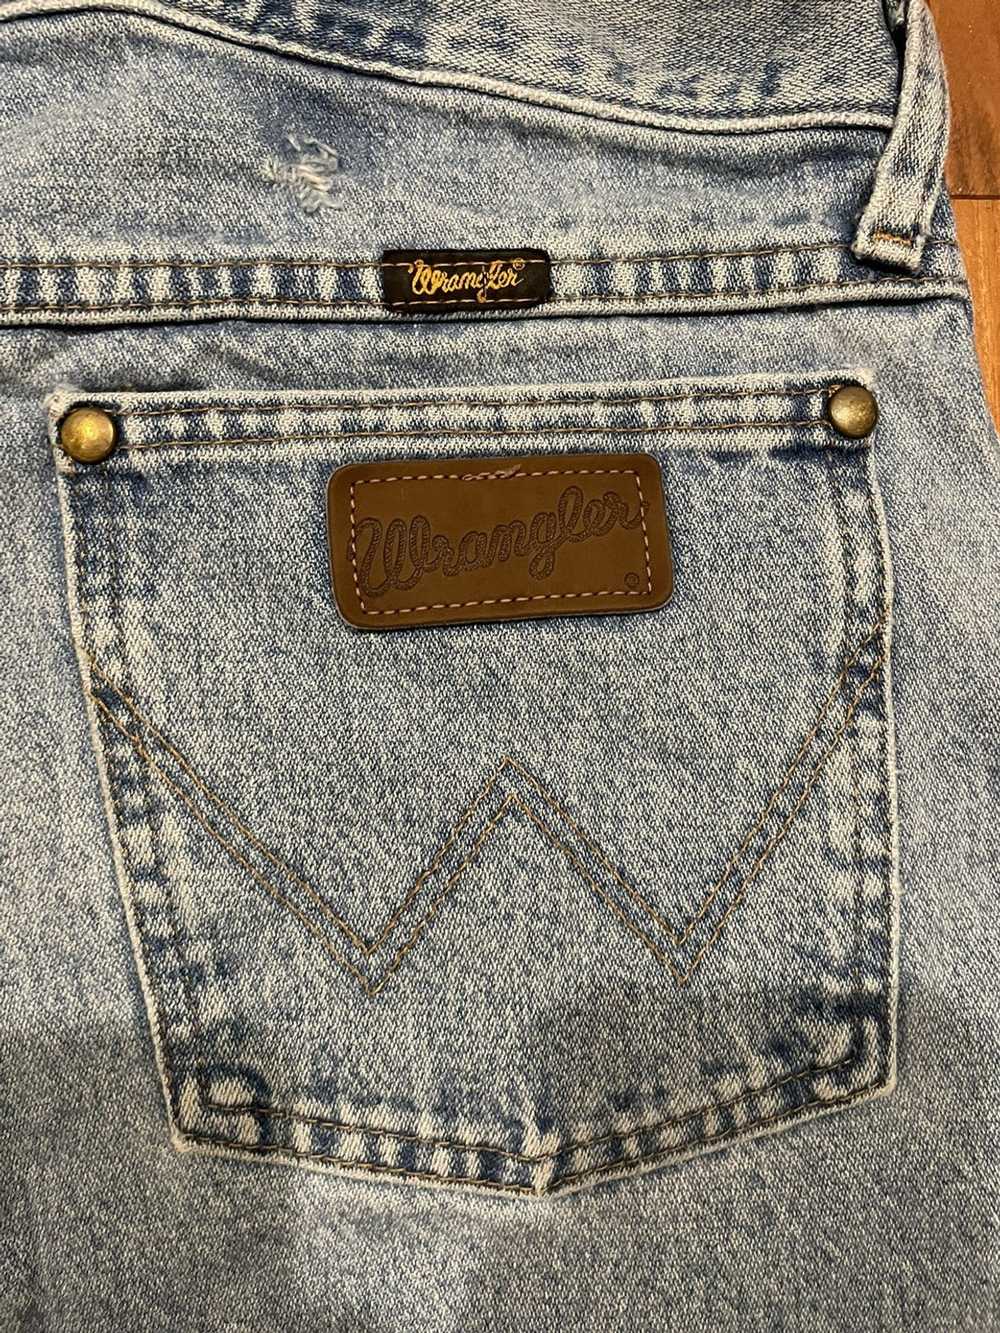 Wrangler Wrangler Jeans Vintage - image 5